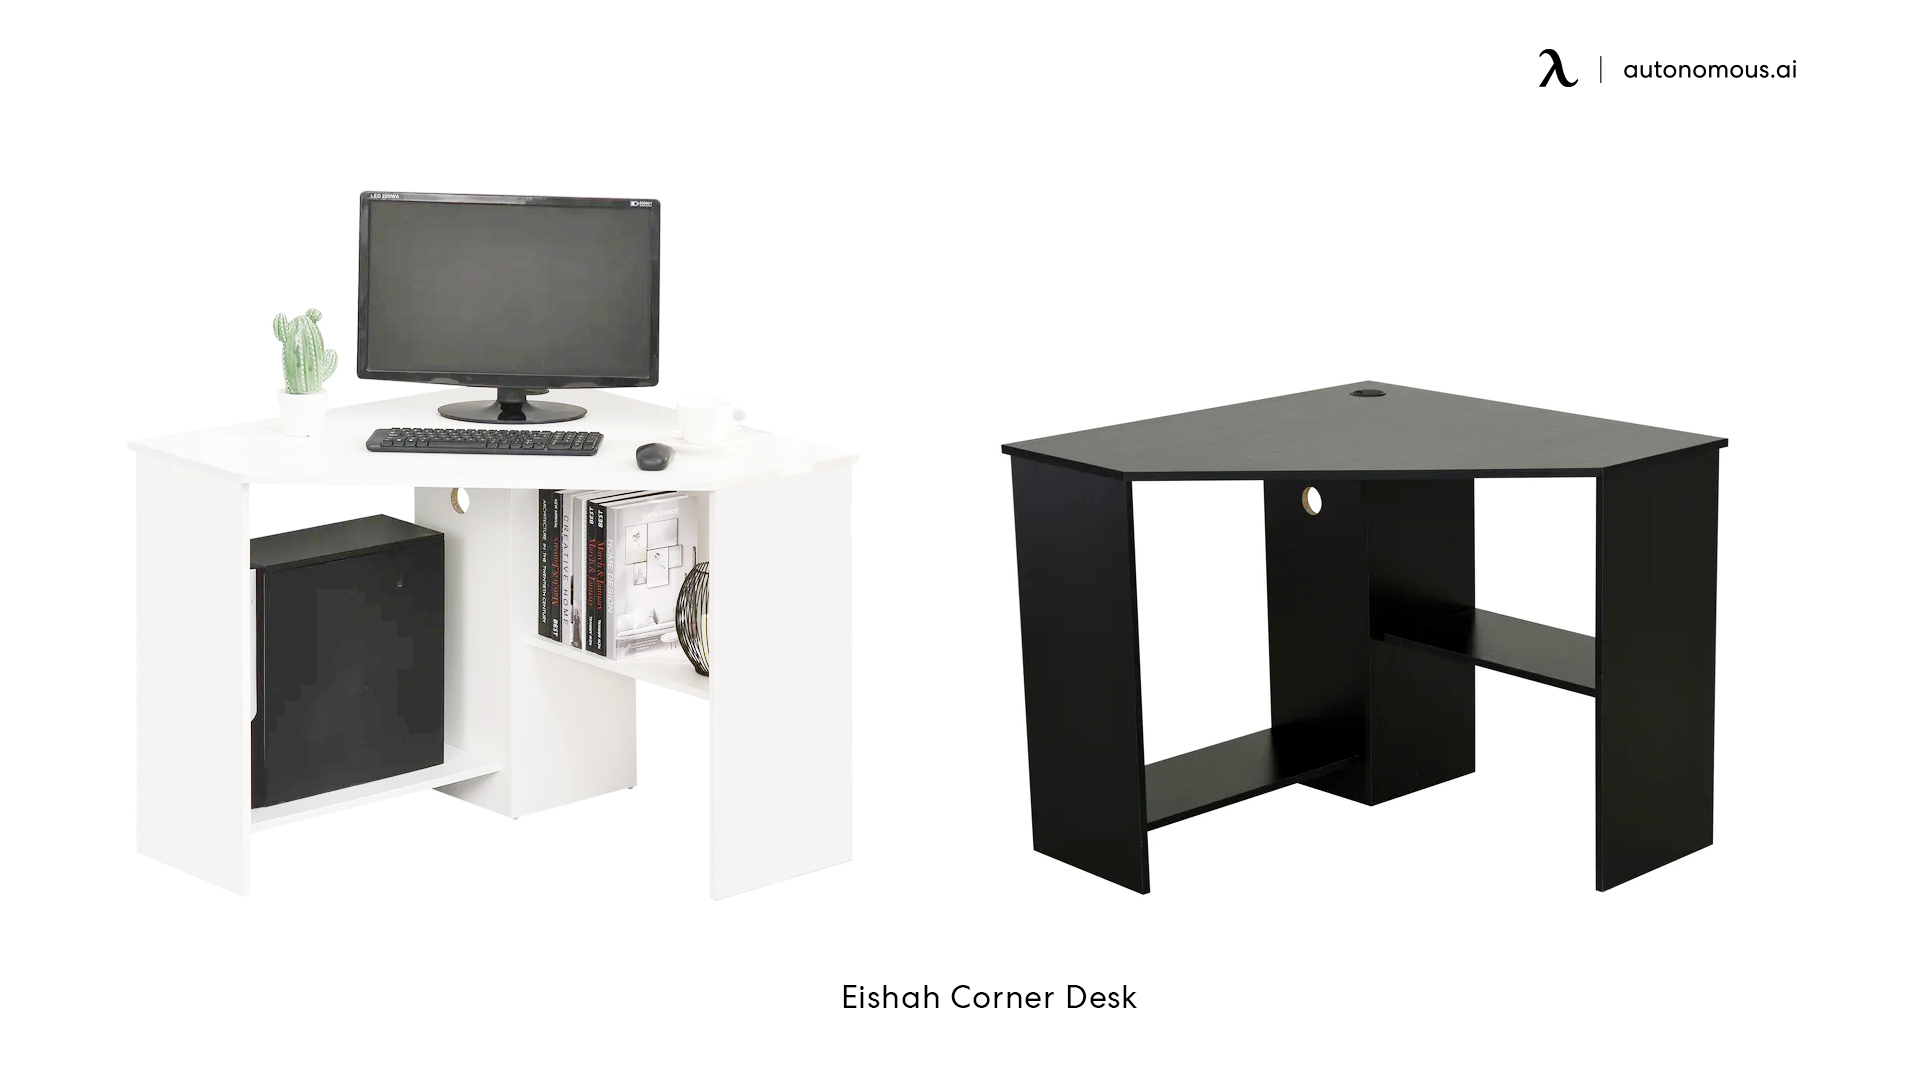 Eishah Corner Desk in Canada